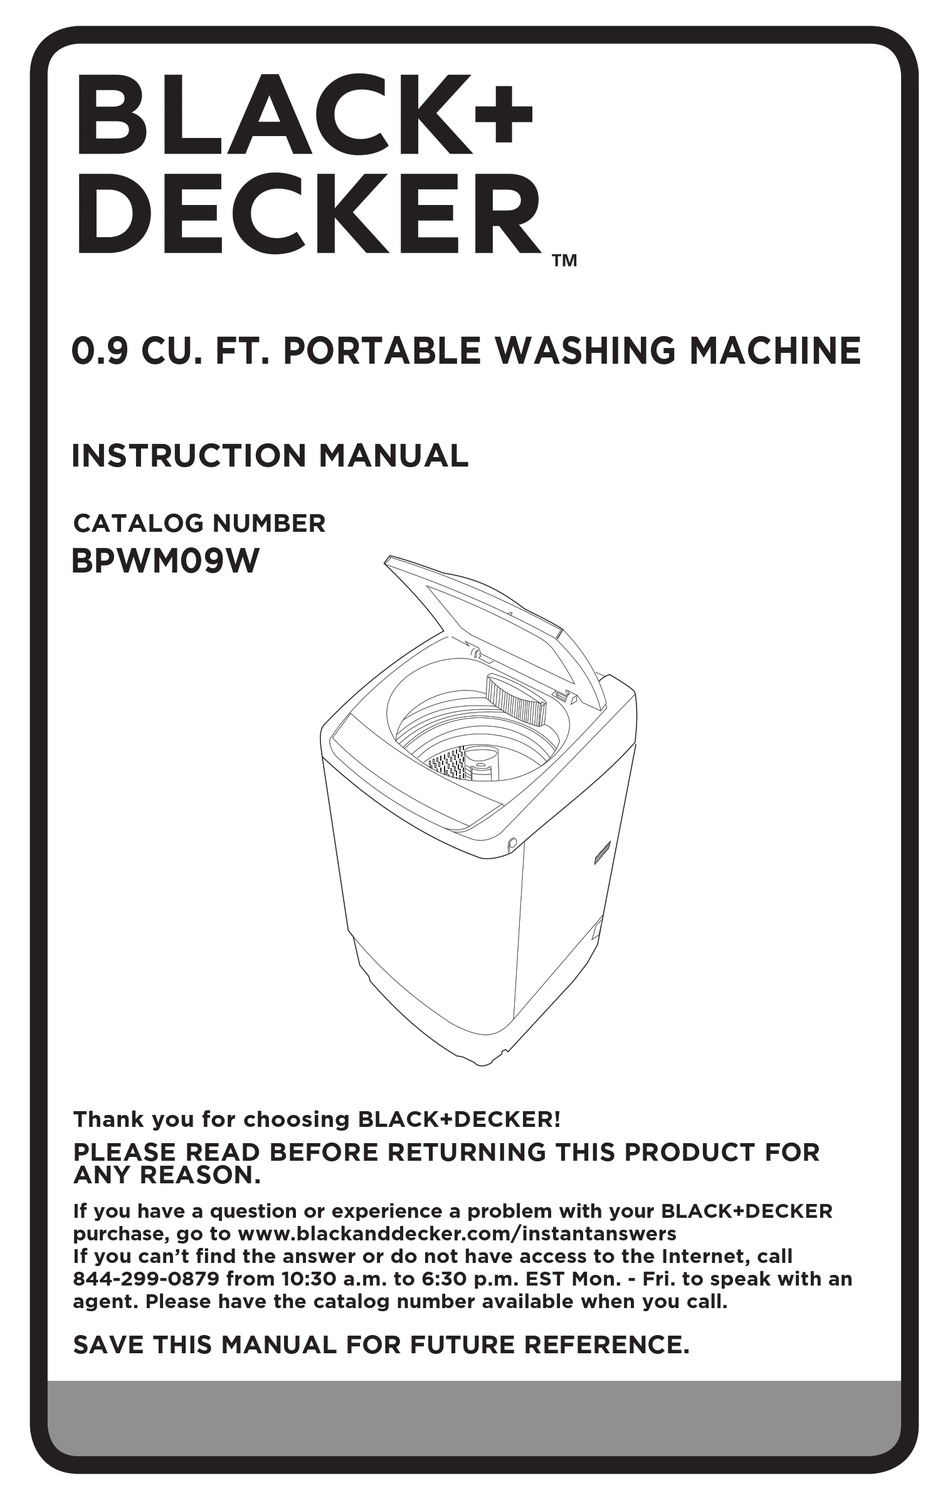 Black And Decker Portable Washing Machine Manual